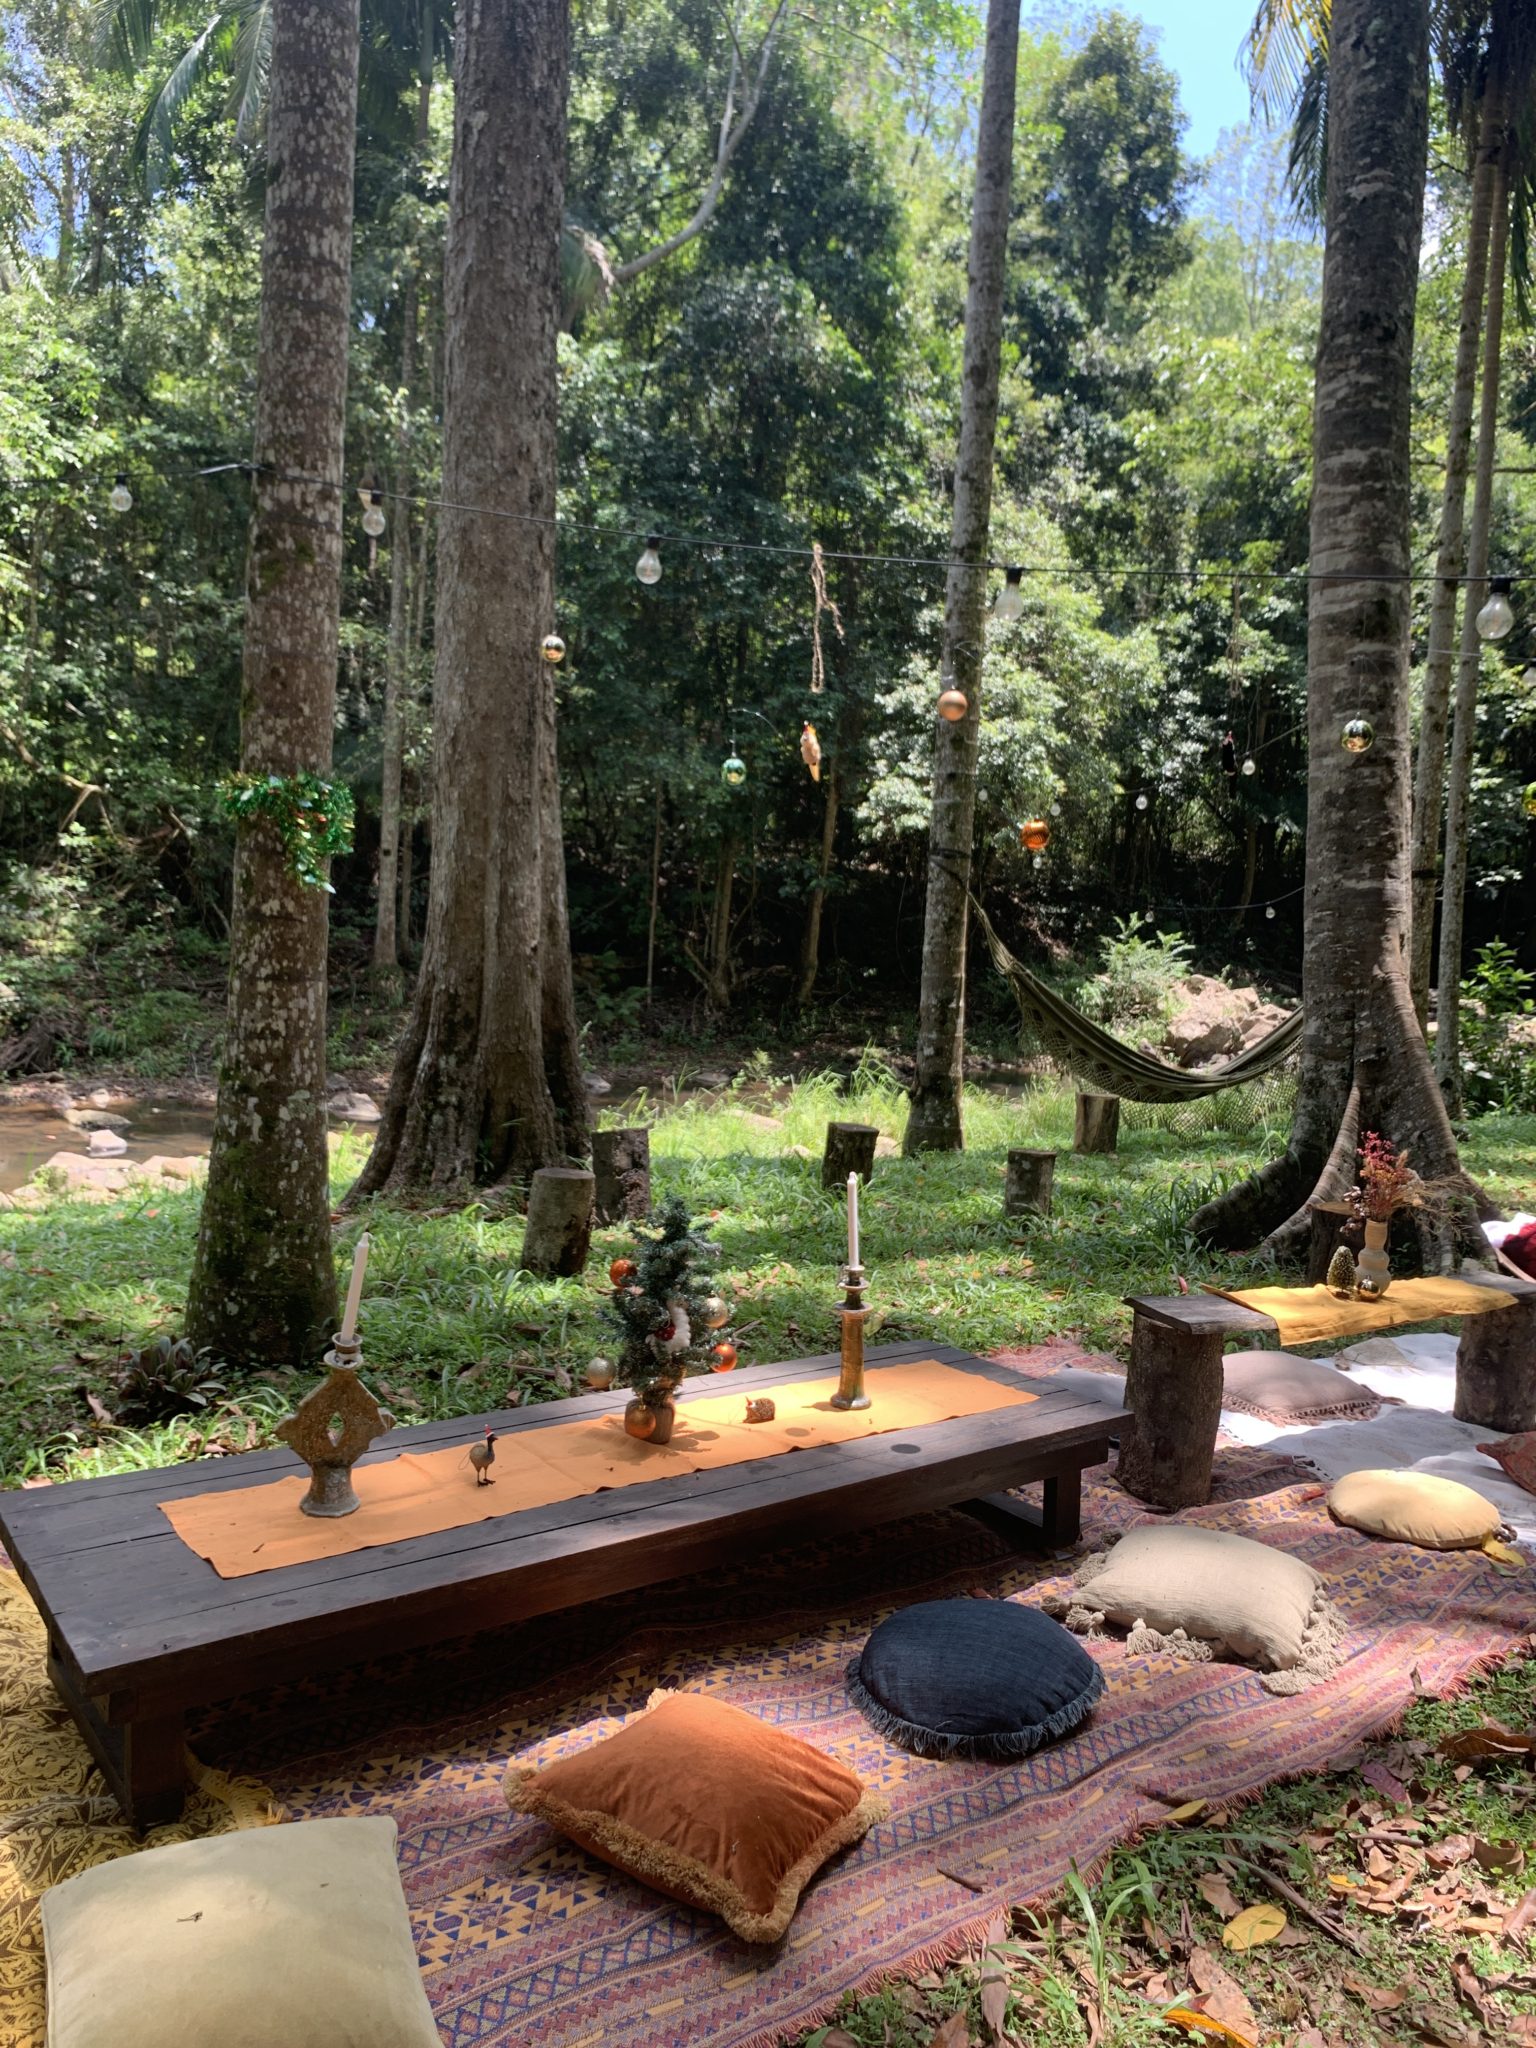 Rainforest Retreat House